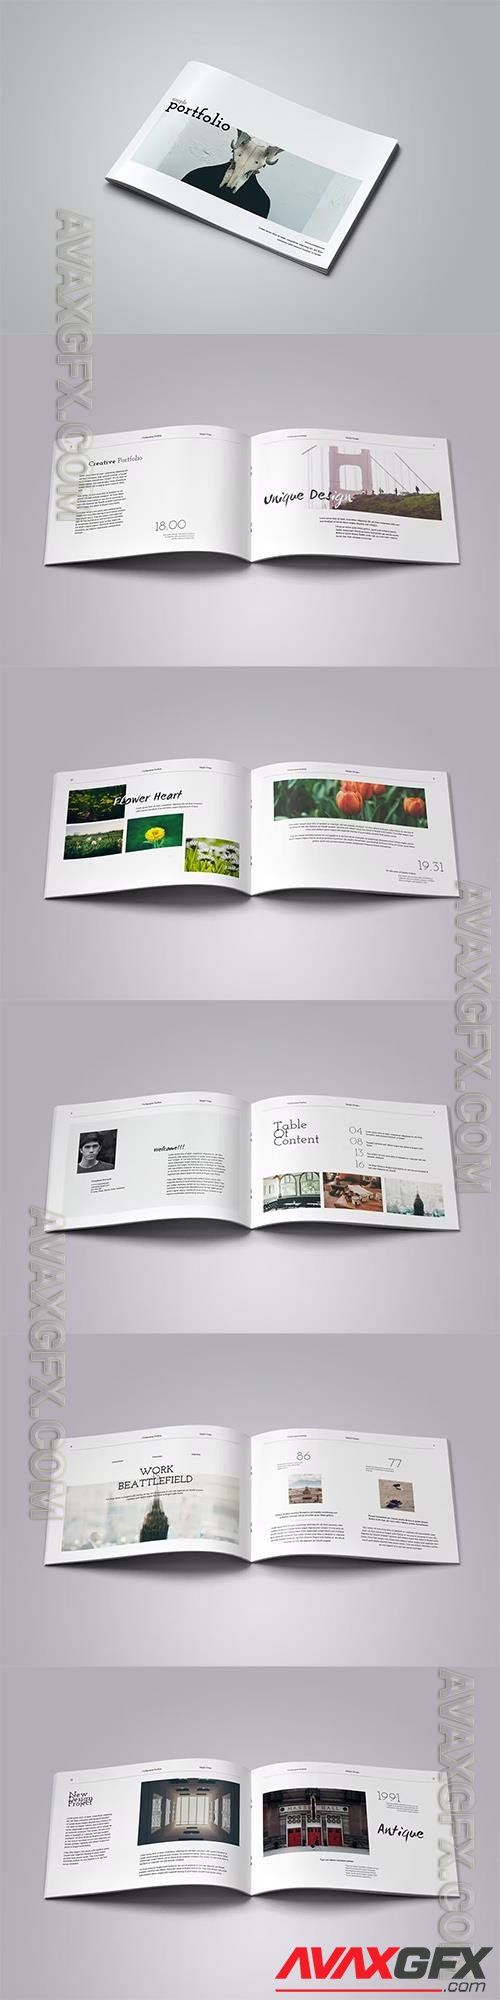 Simportf - Brochure ED43W7W